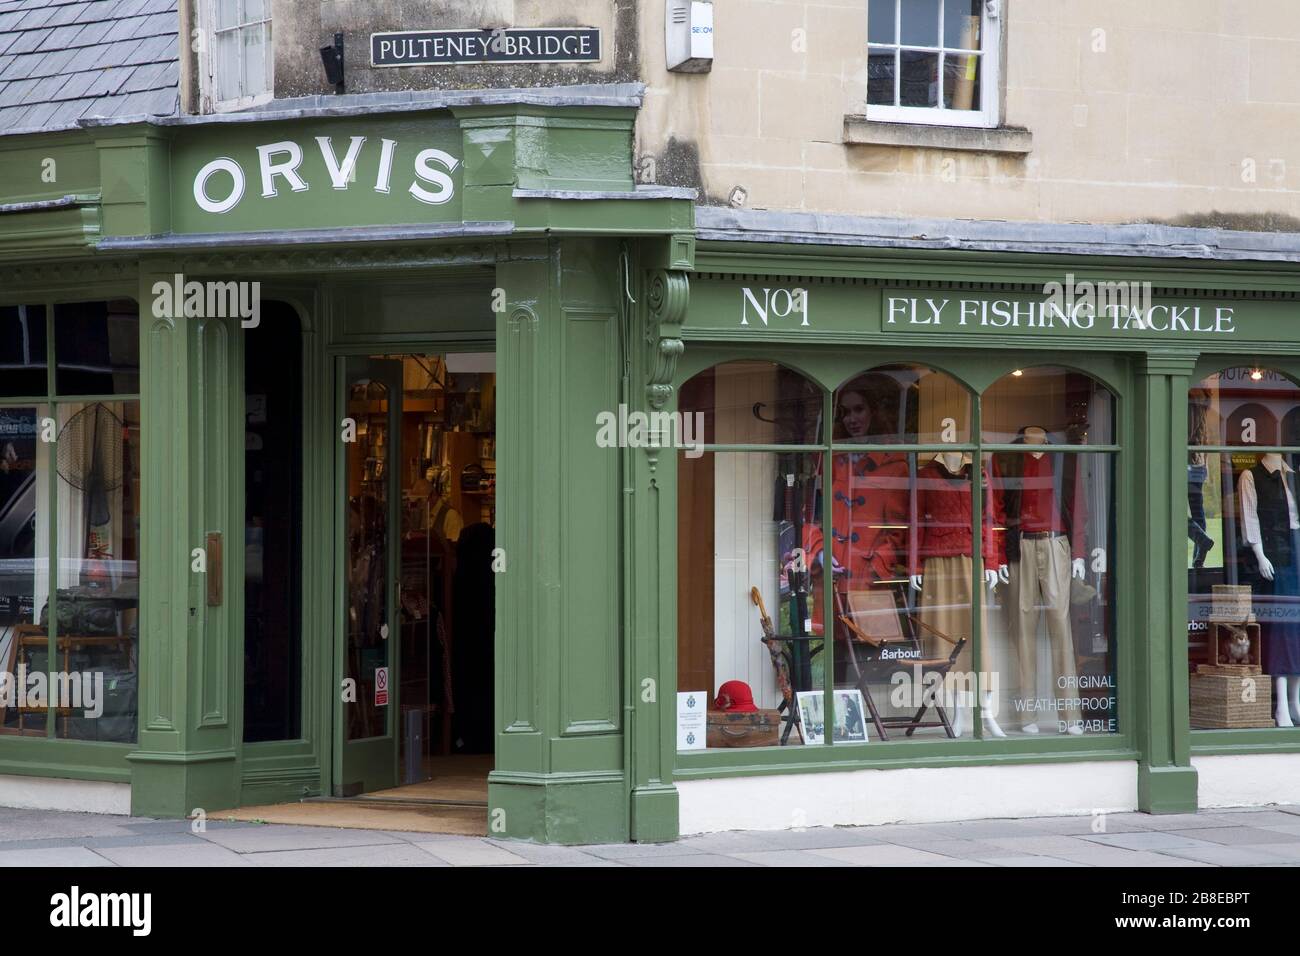 Orvis shop on Pulteney Bridge, Bath, Somerset, England, United Kingdom, Great Britain, Europe Stock Photo